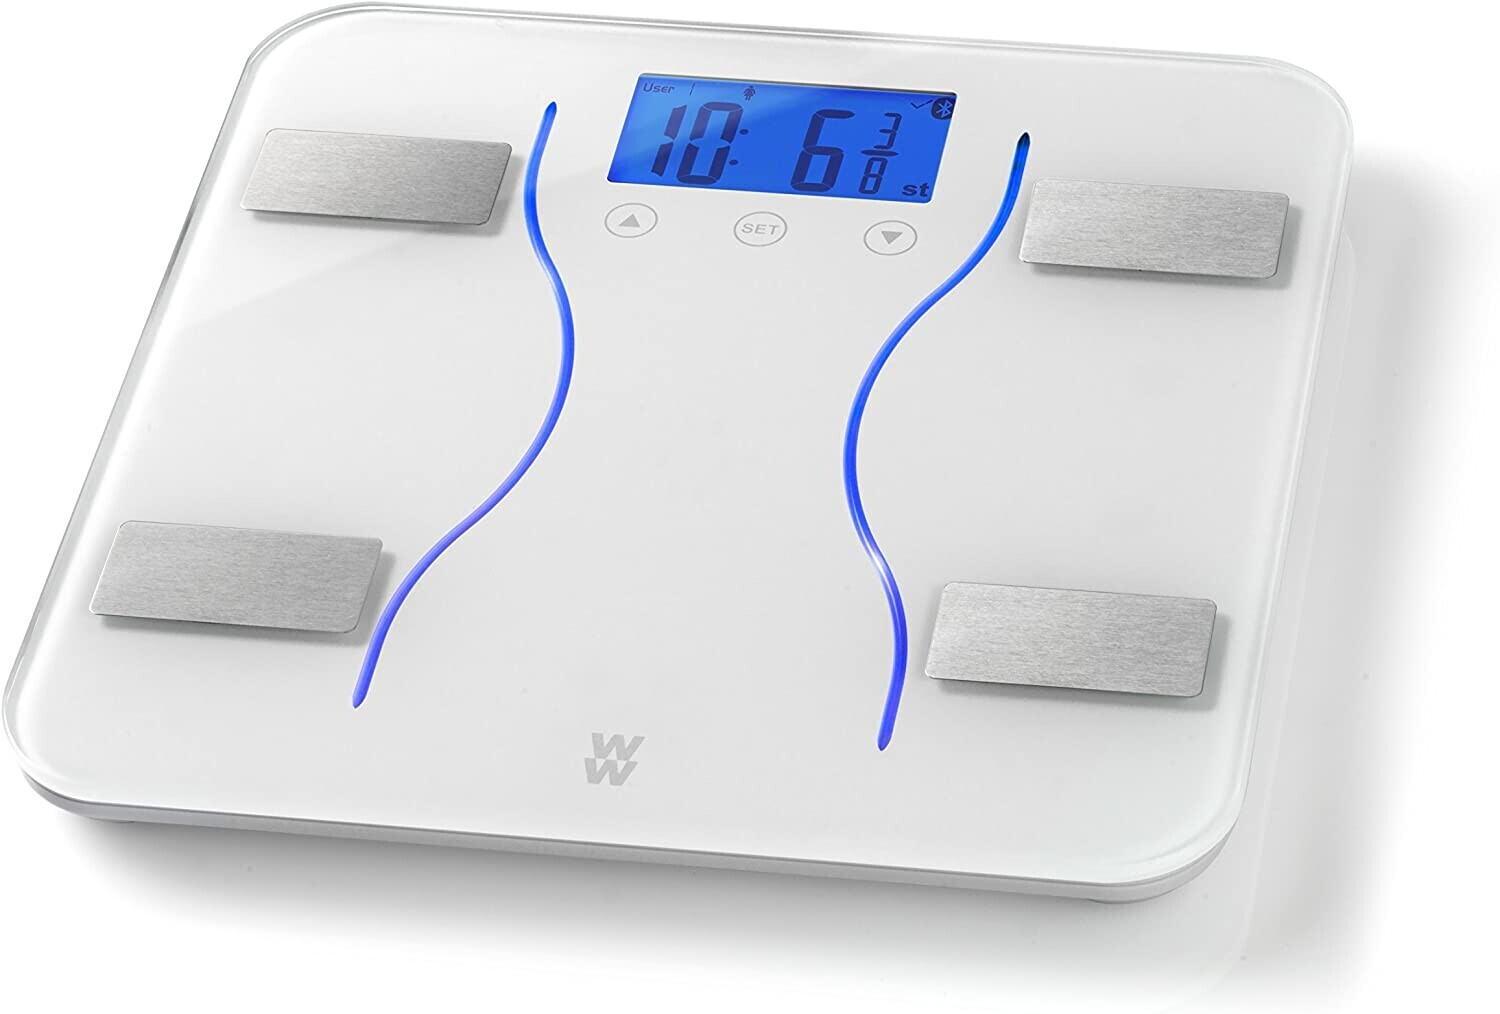 Weight Watchers Body Analysis Scale